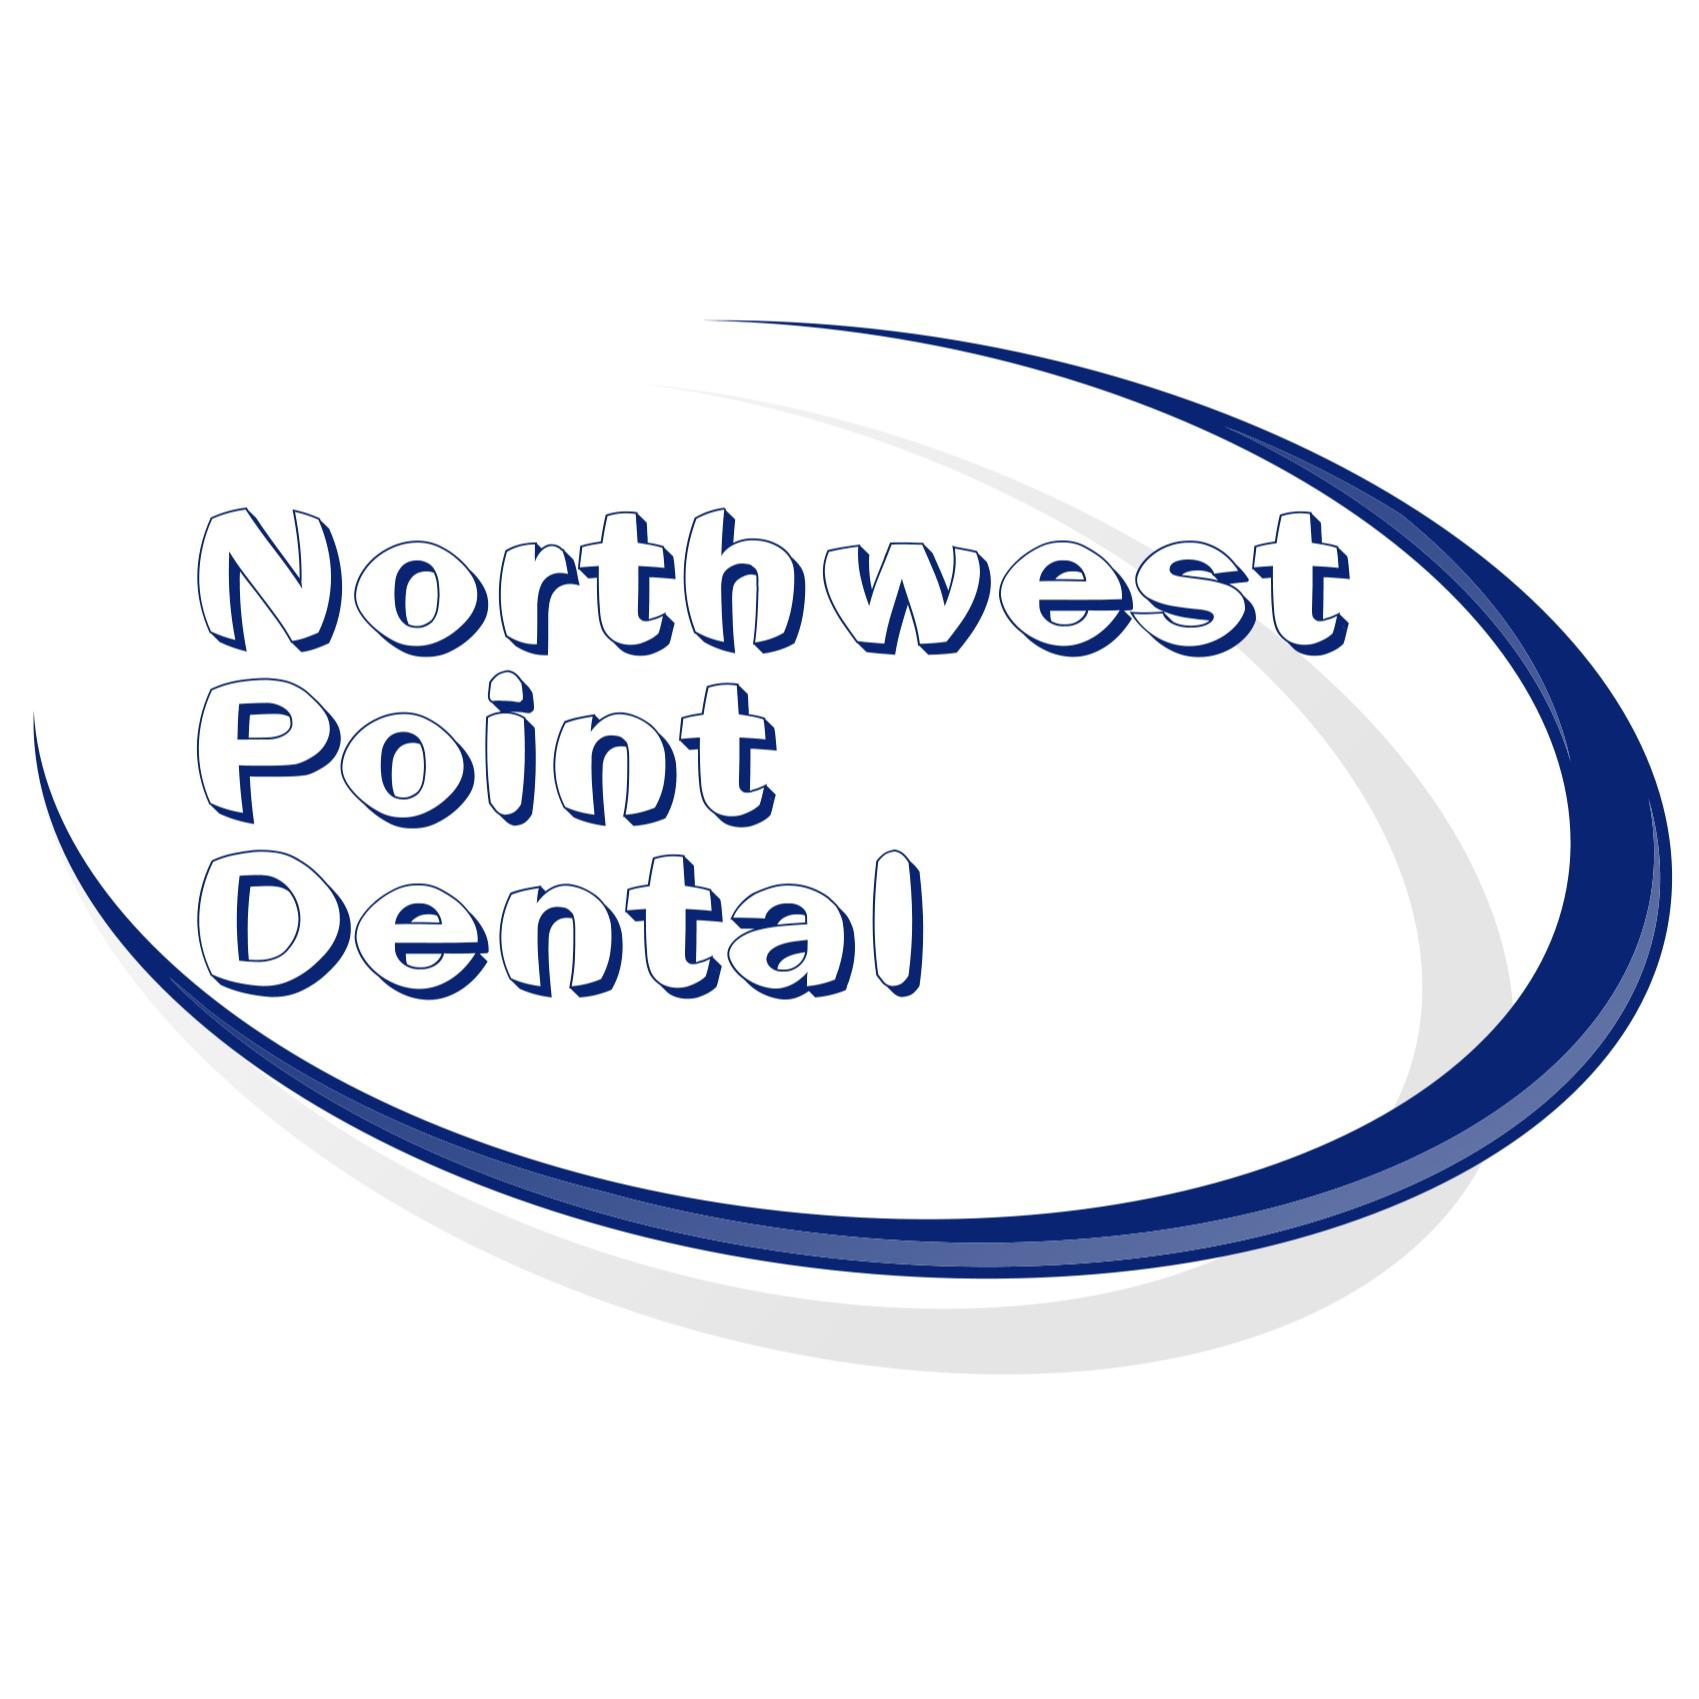 Northwest Point Dental - Chicago, IL 60631 - (847)847-5392 | ShowMeLocal.com